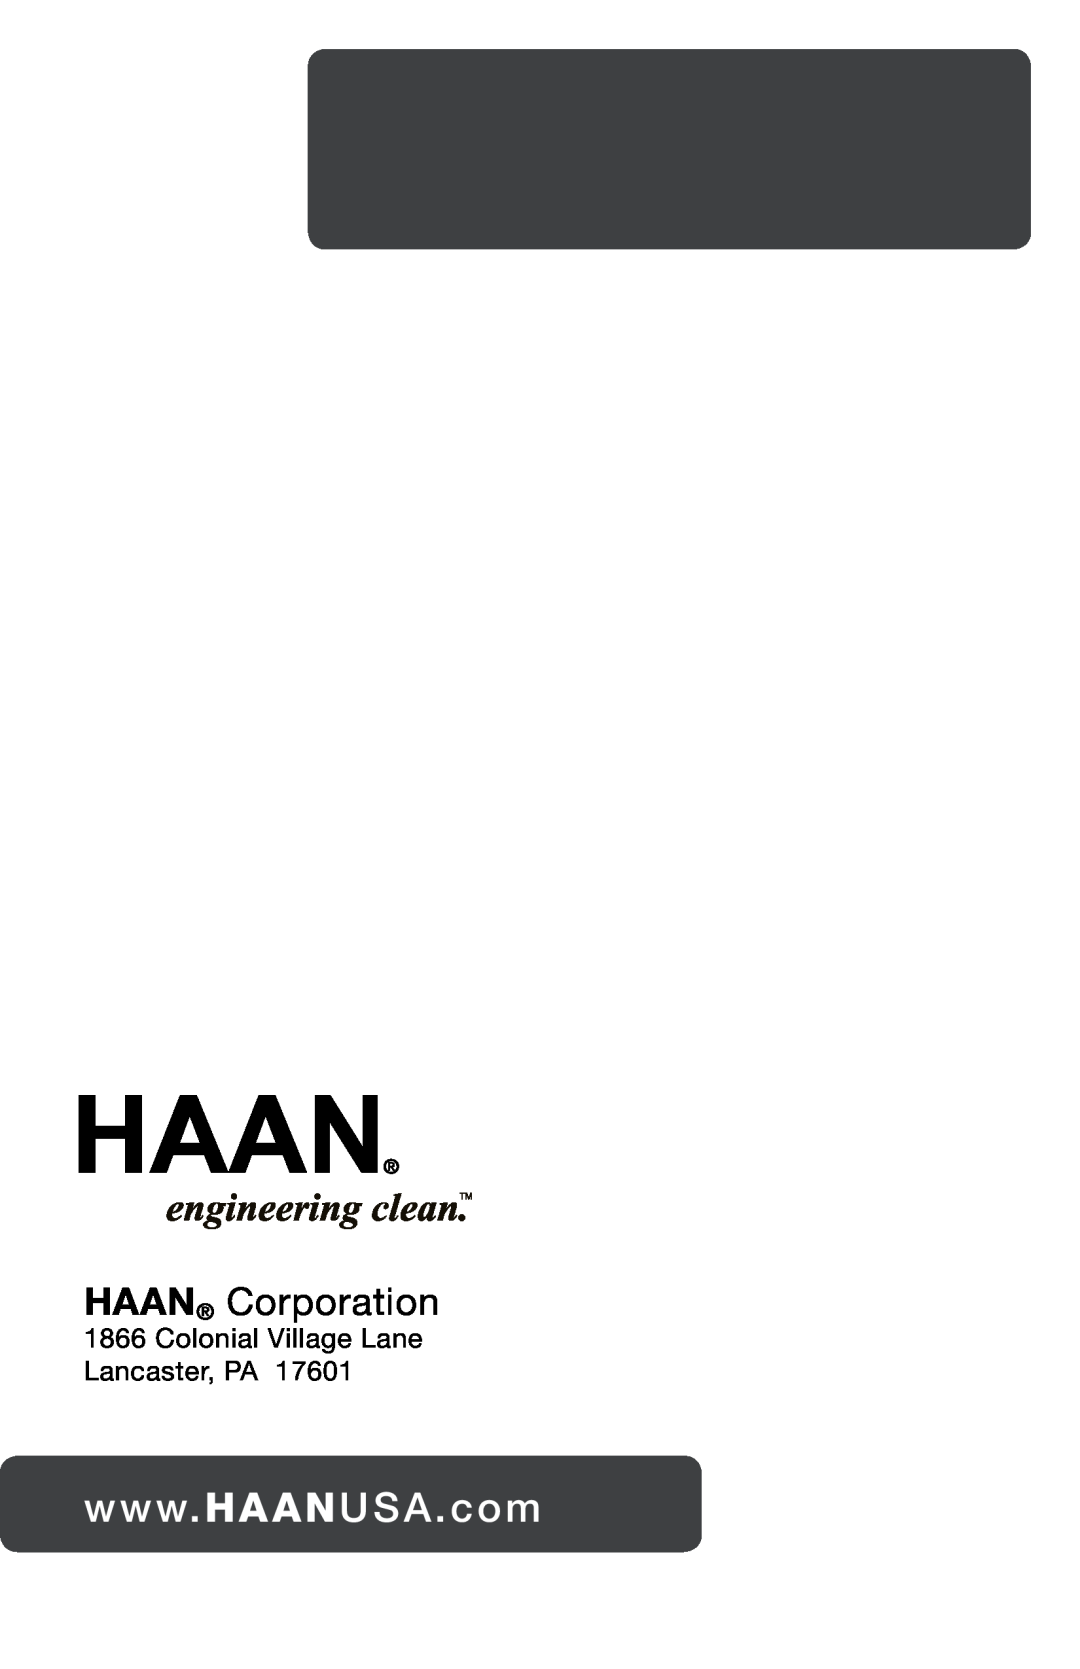 Haan FS-30P+ user manual HAAN Corporation, Colonial Village Lane Lancaster, PA 